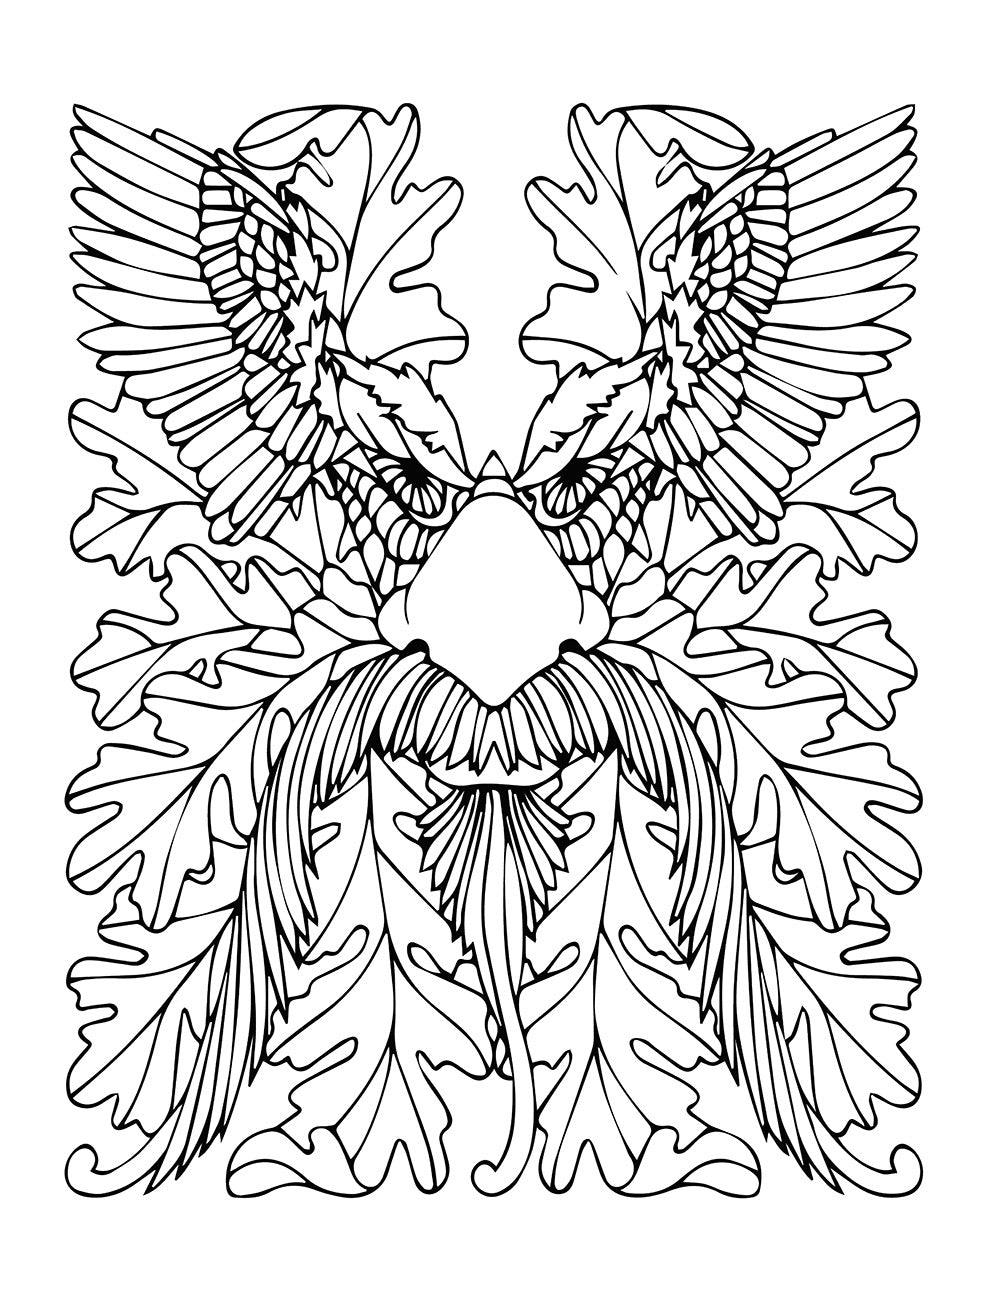 Woodspirits Carving Patterns - Printed